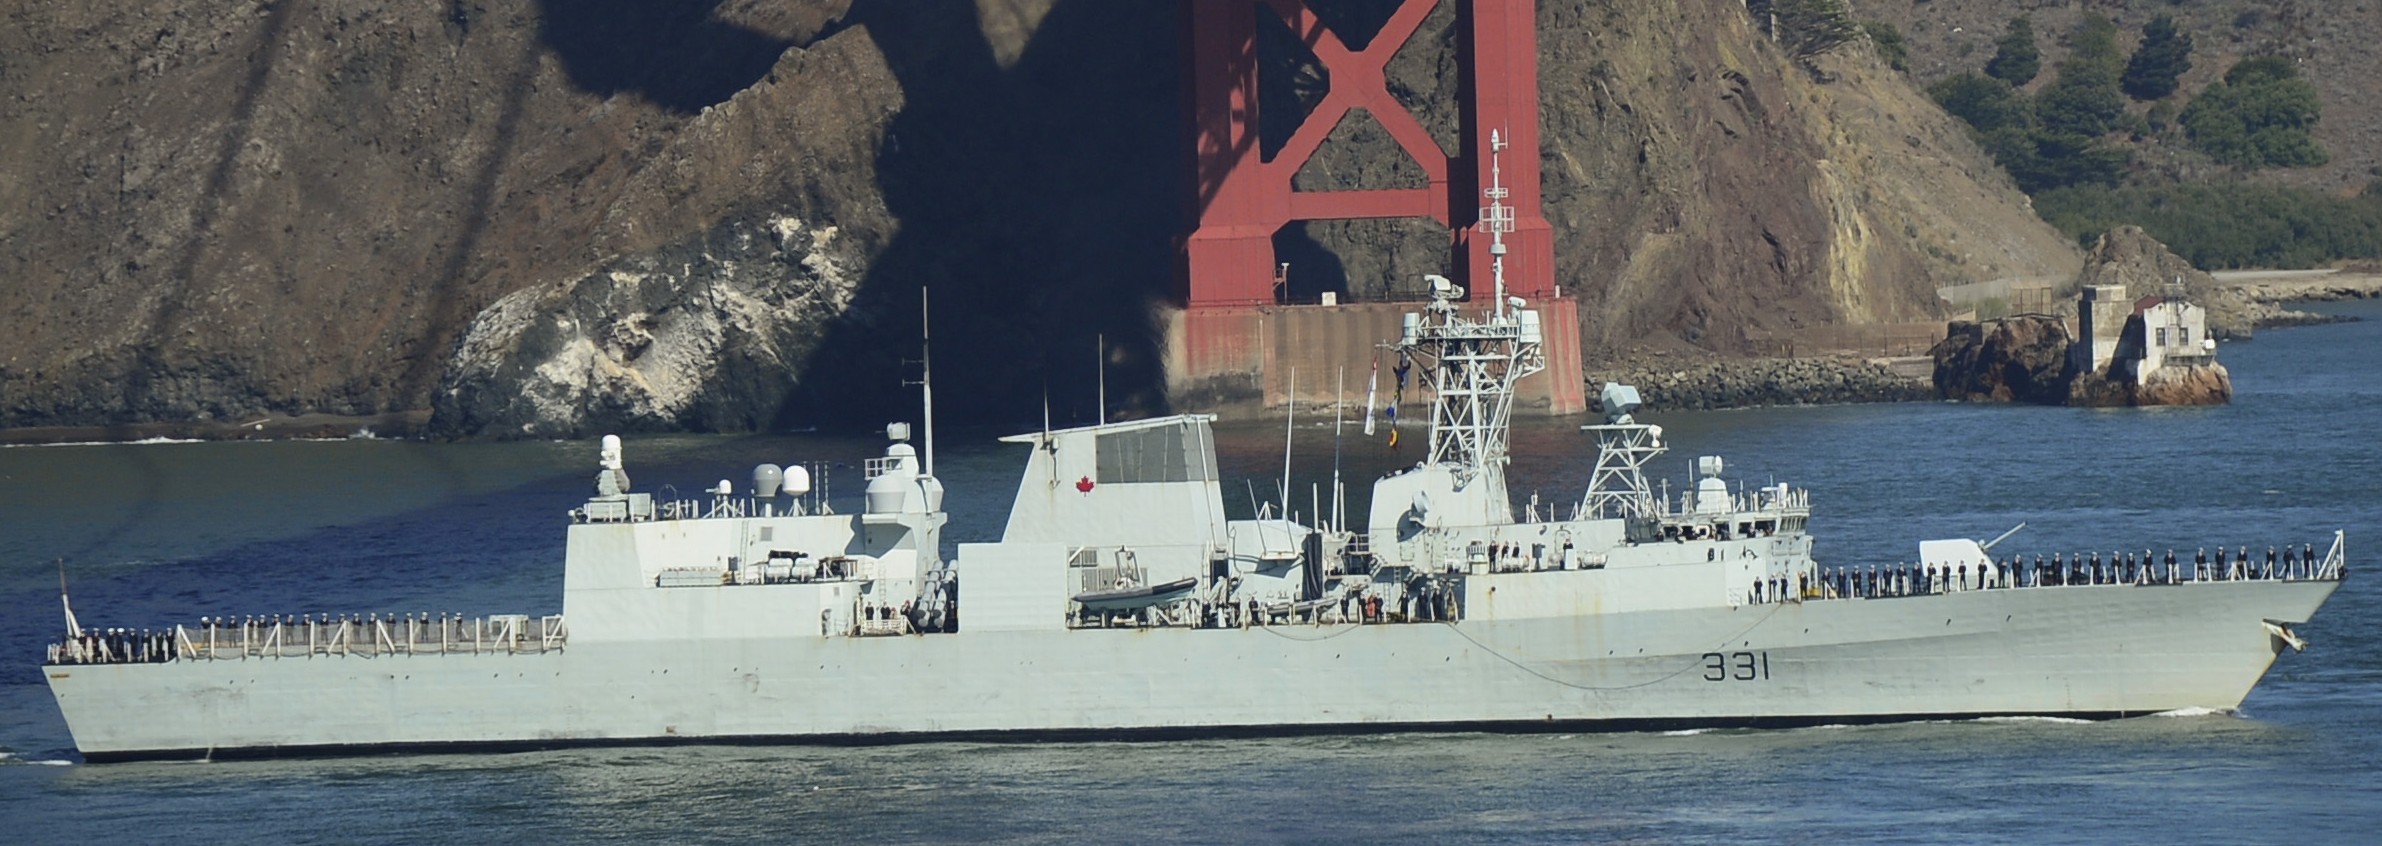 ffh-331 hmcs vancouver halifax class helicopter patrol frigate ncsm royal canadian navy 20 san francisco fleet week